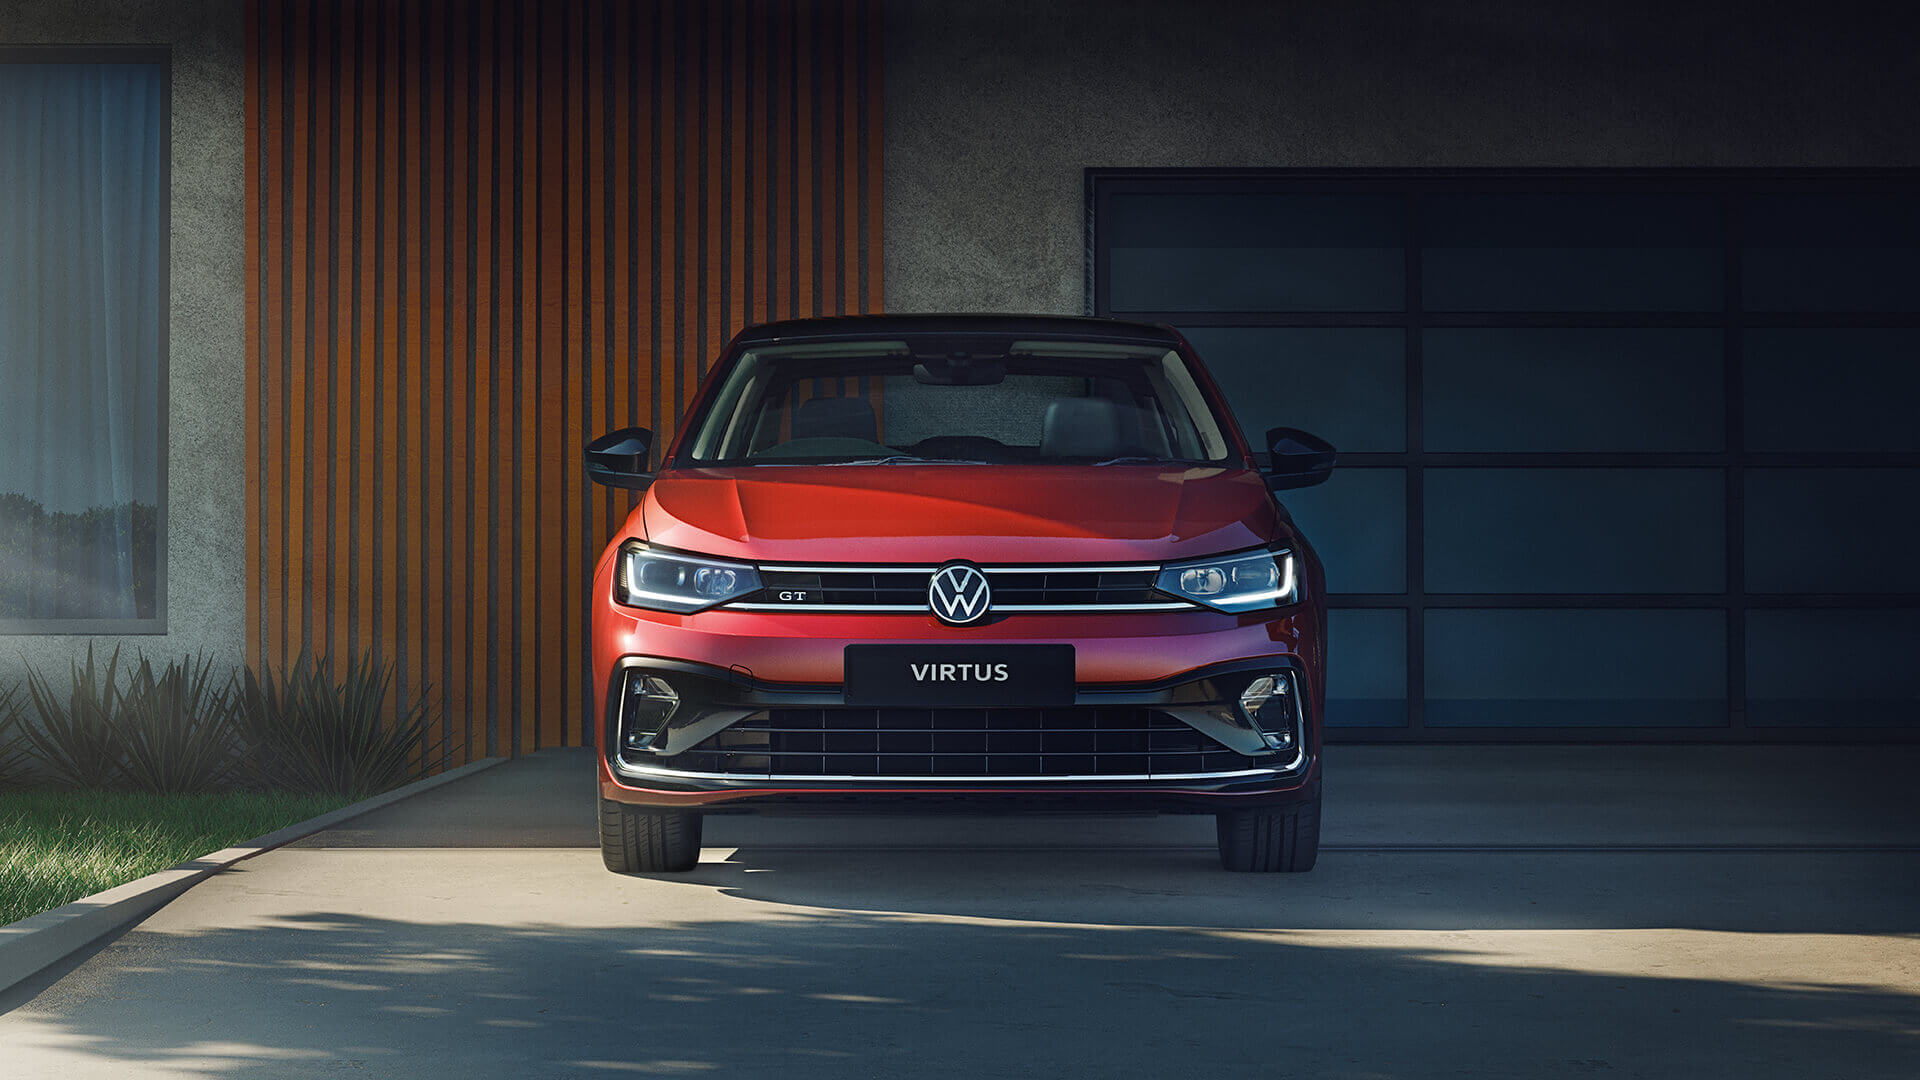 New Virtus | Volkswagen India